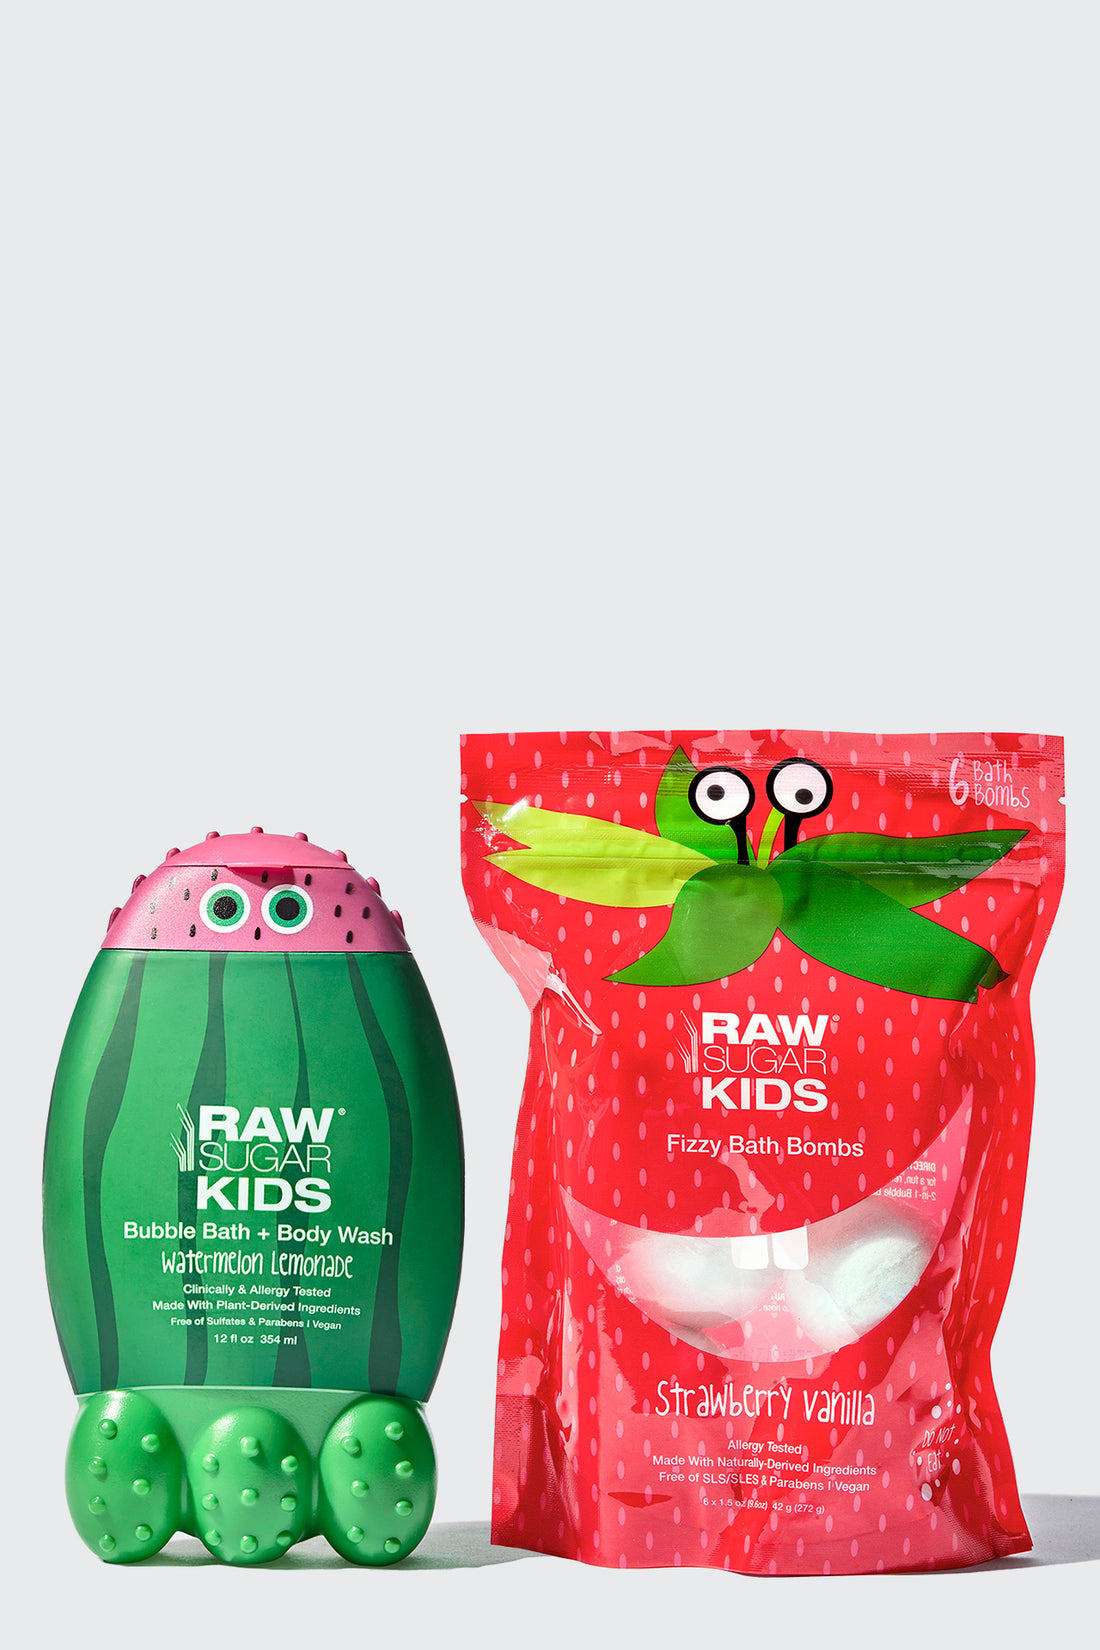 Raw Sugar Kids Bubble Bath + Body Wash, Superberry Cherry - 12 fl oz